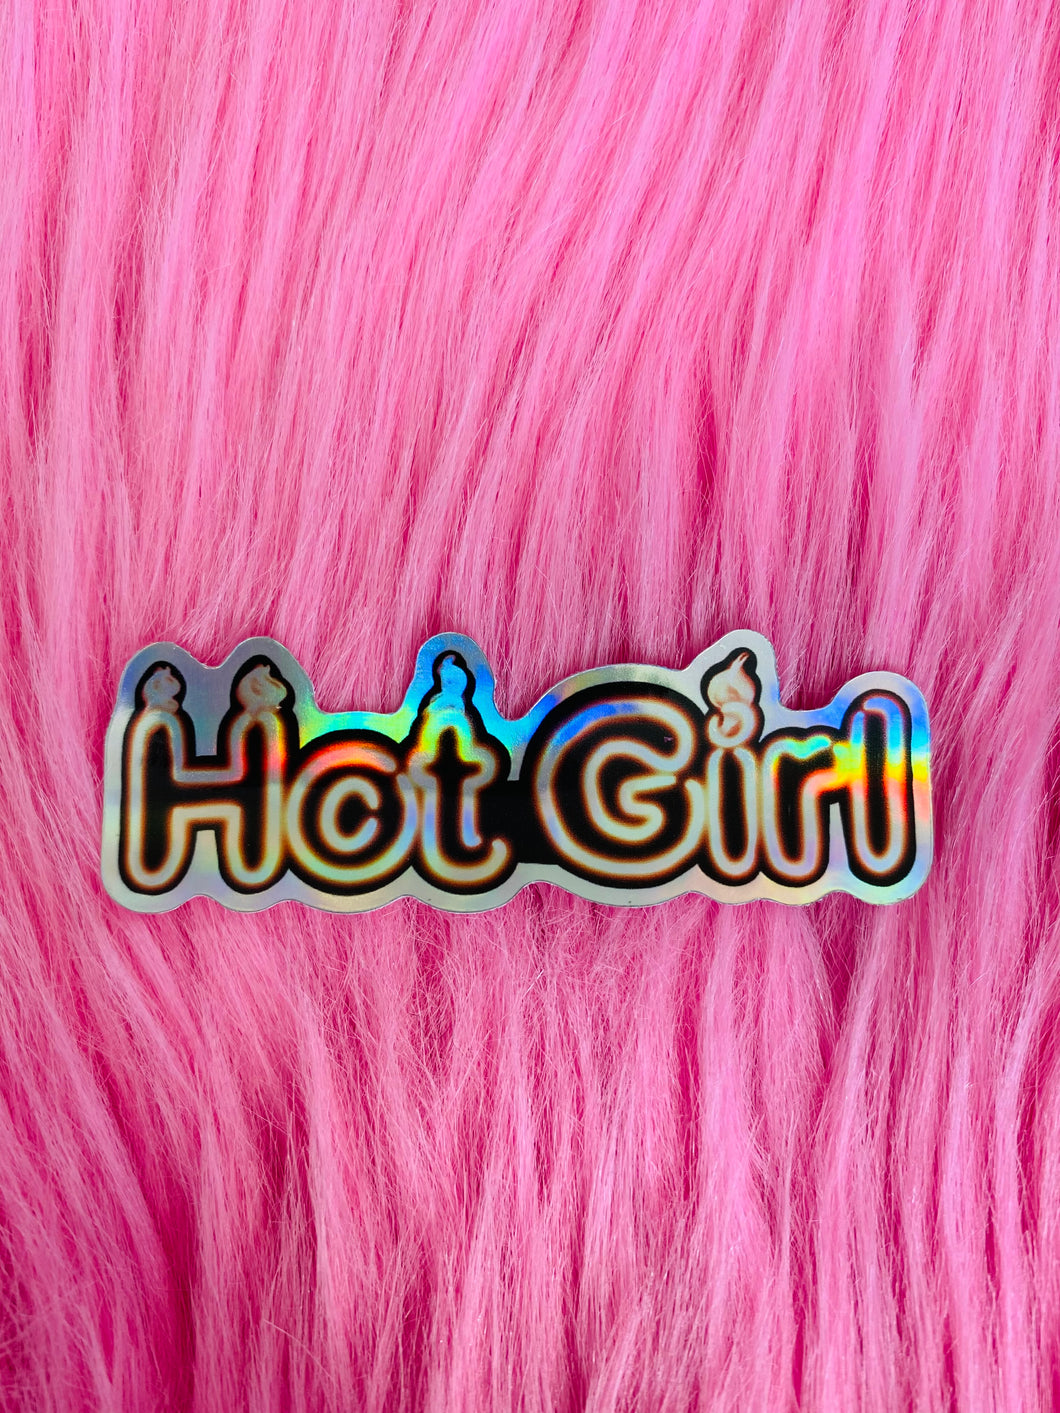 Real Hot Girl Sticker